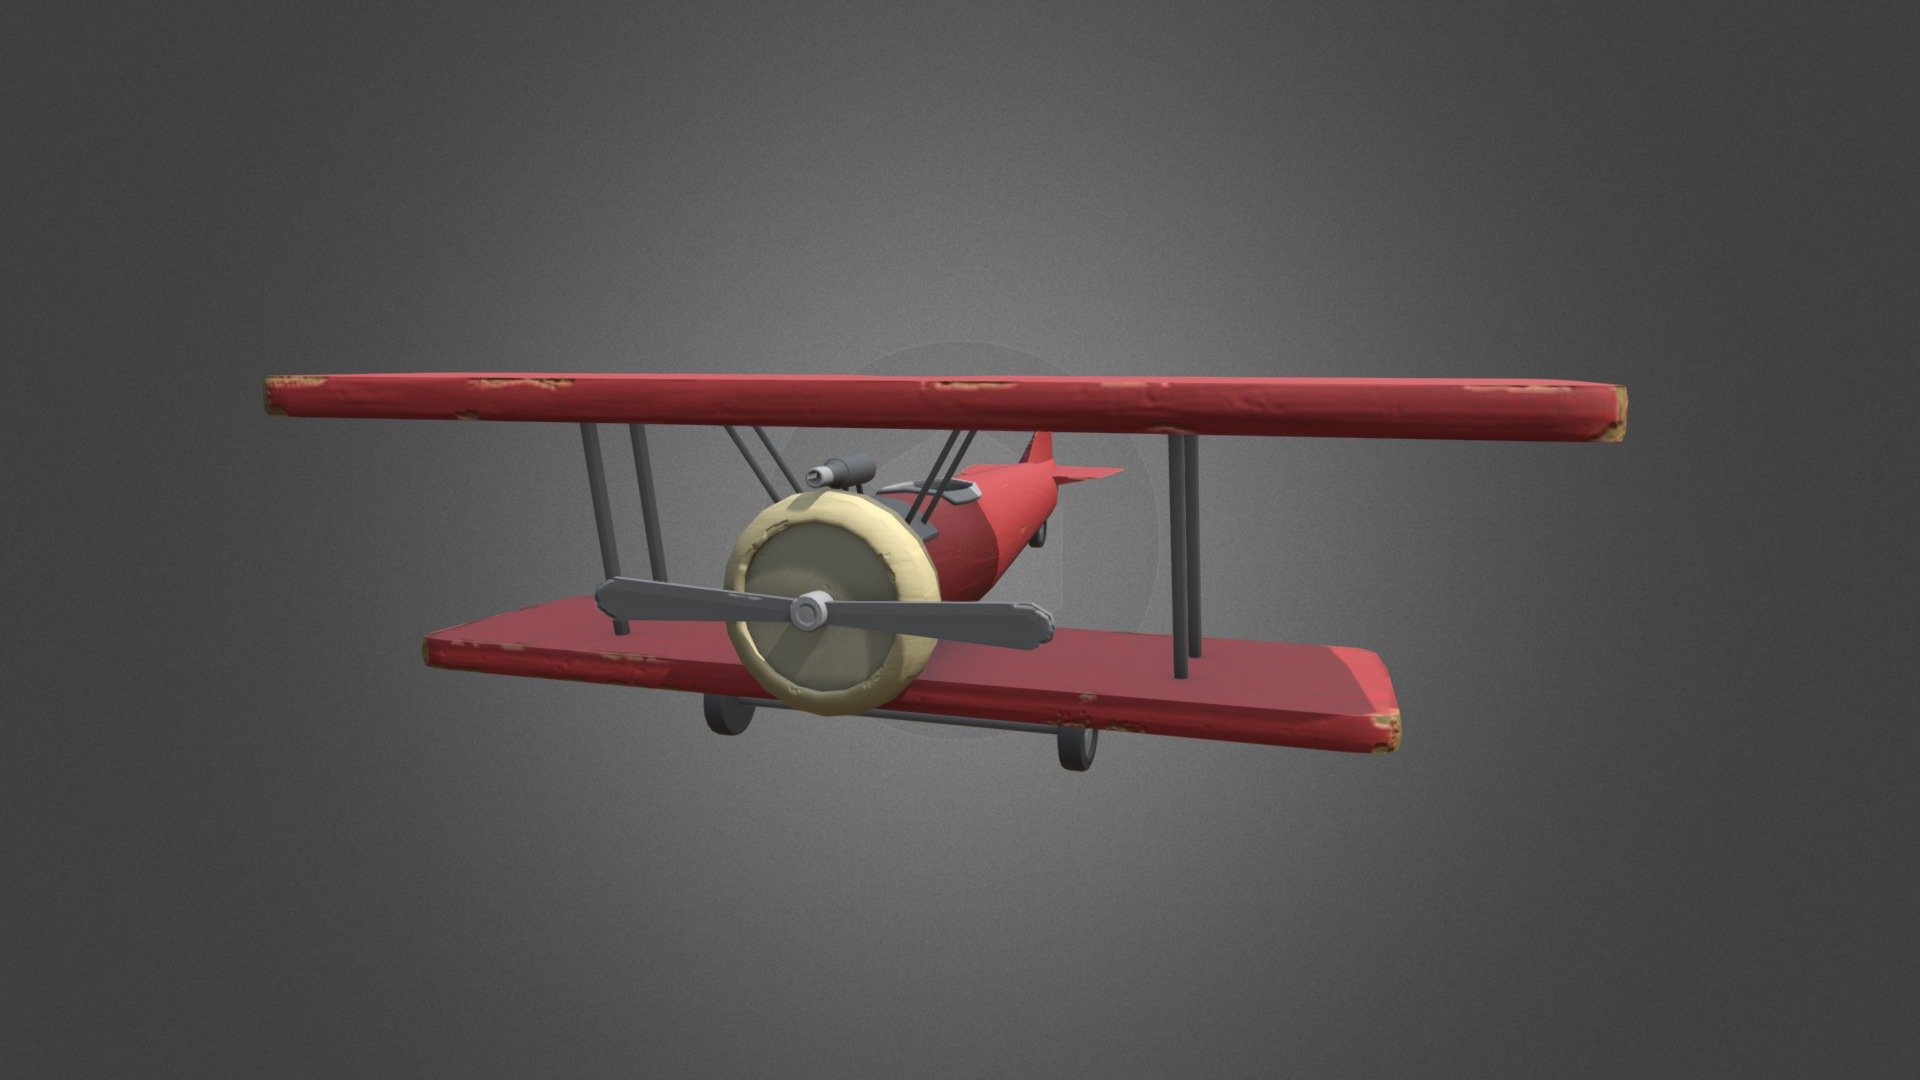 Toy Biplane